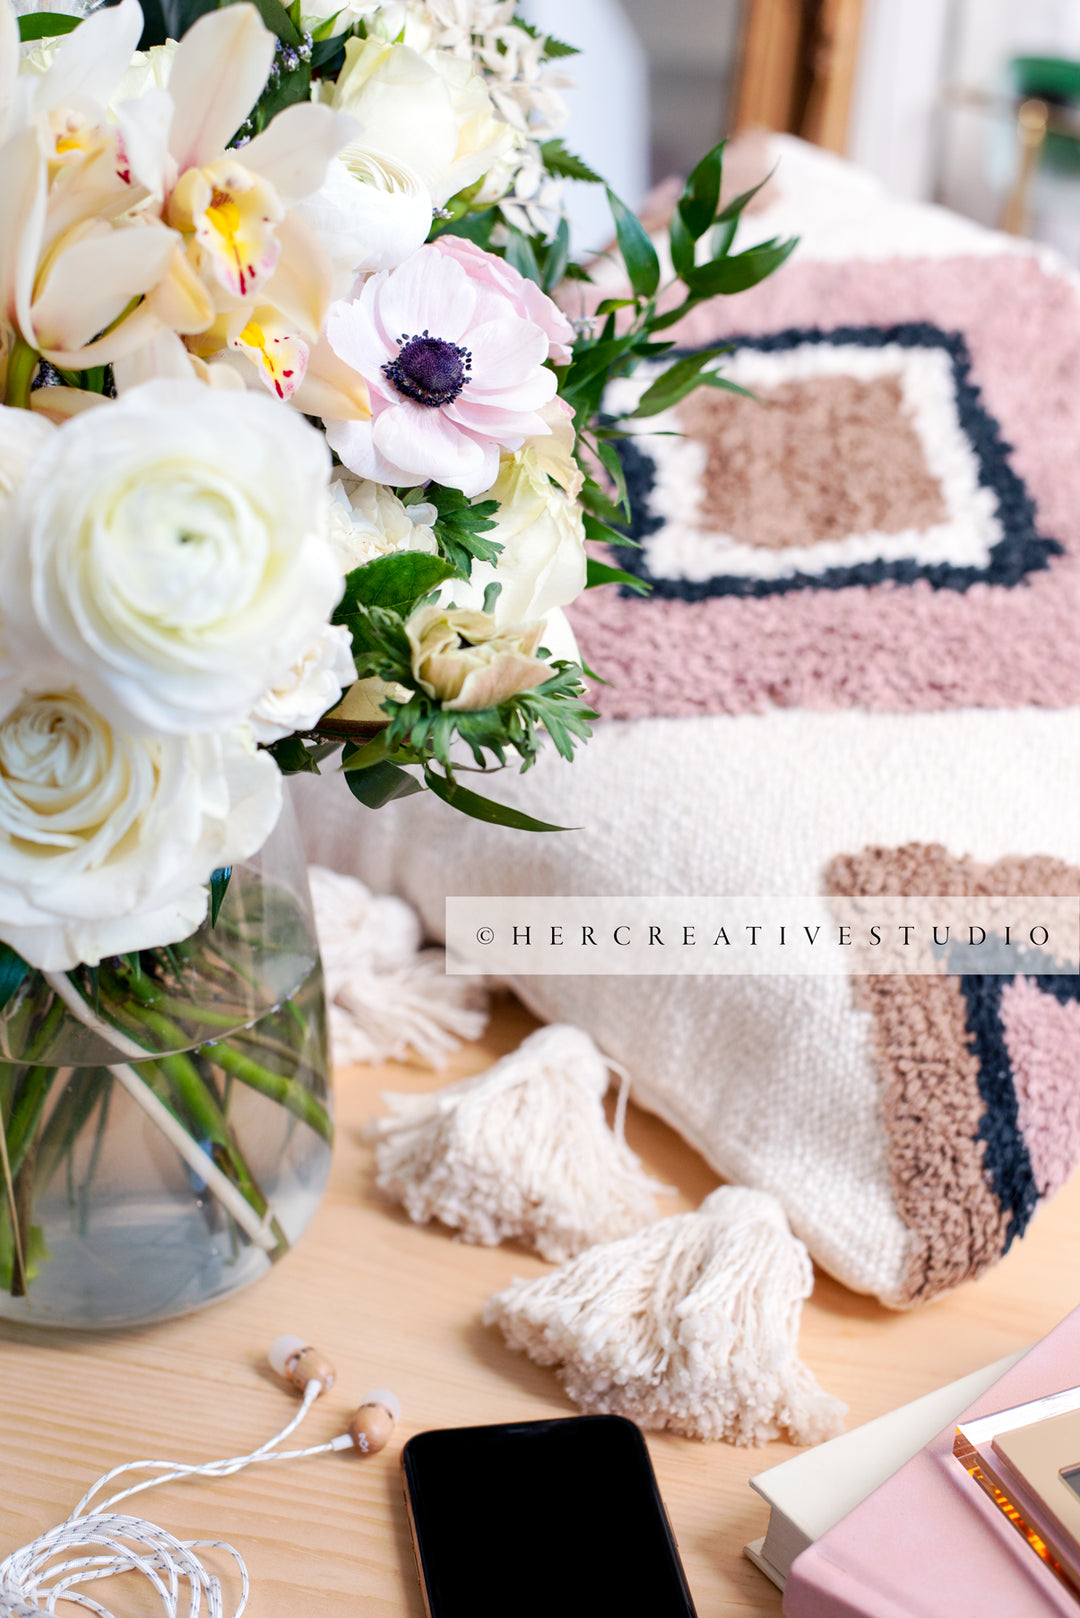 Cushion & Flowers on Wood Floor, Styled Stock Image